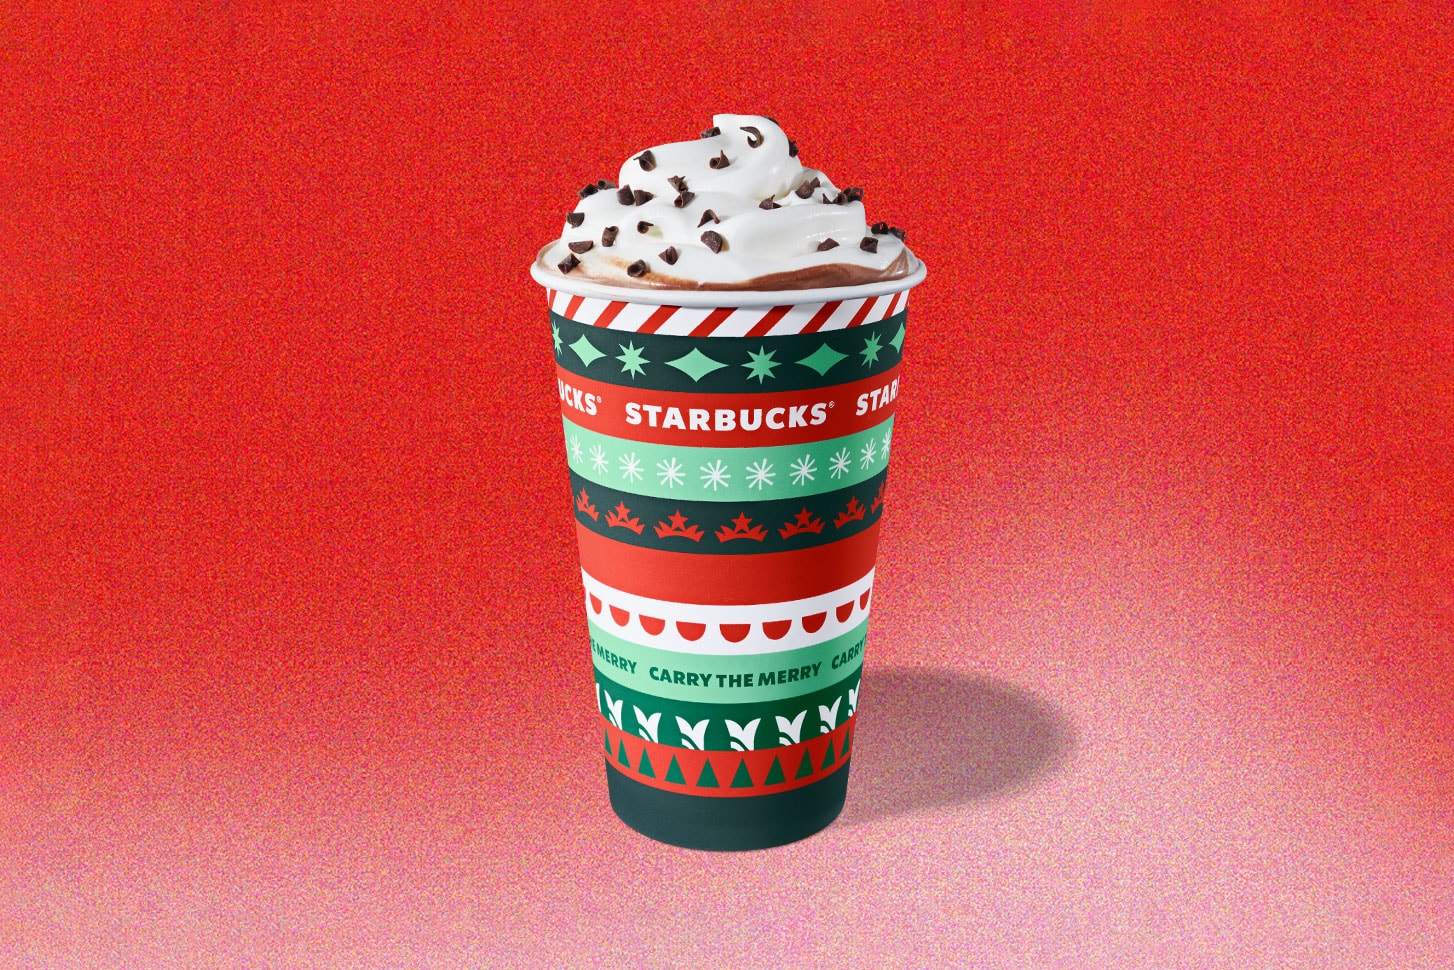 Starbucks Holiday Drinks Cup Peppermint Mocha Eggnog Latte Toasted White Chocolate Caramel Brulee Chestnut Praline